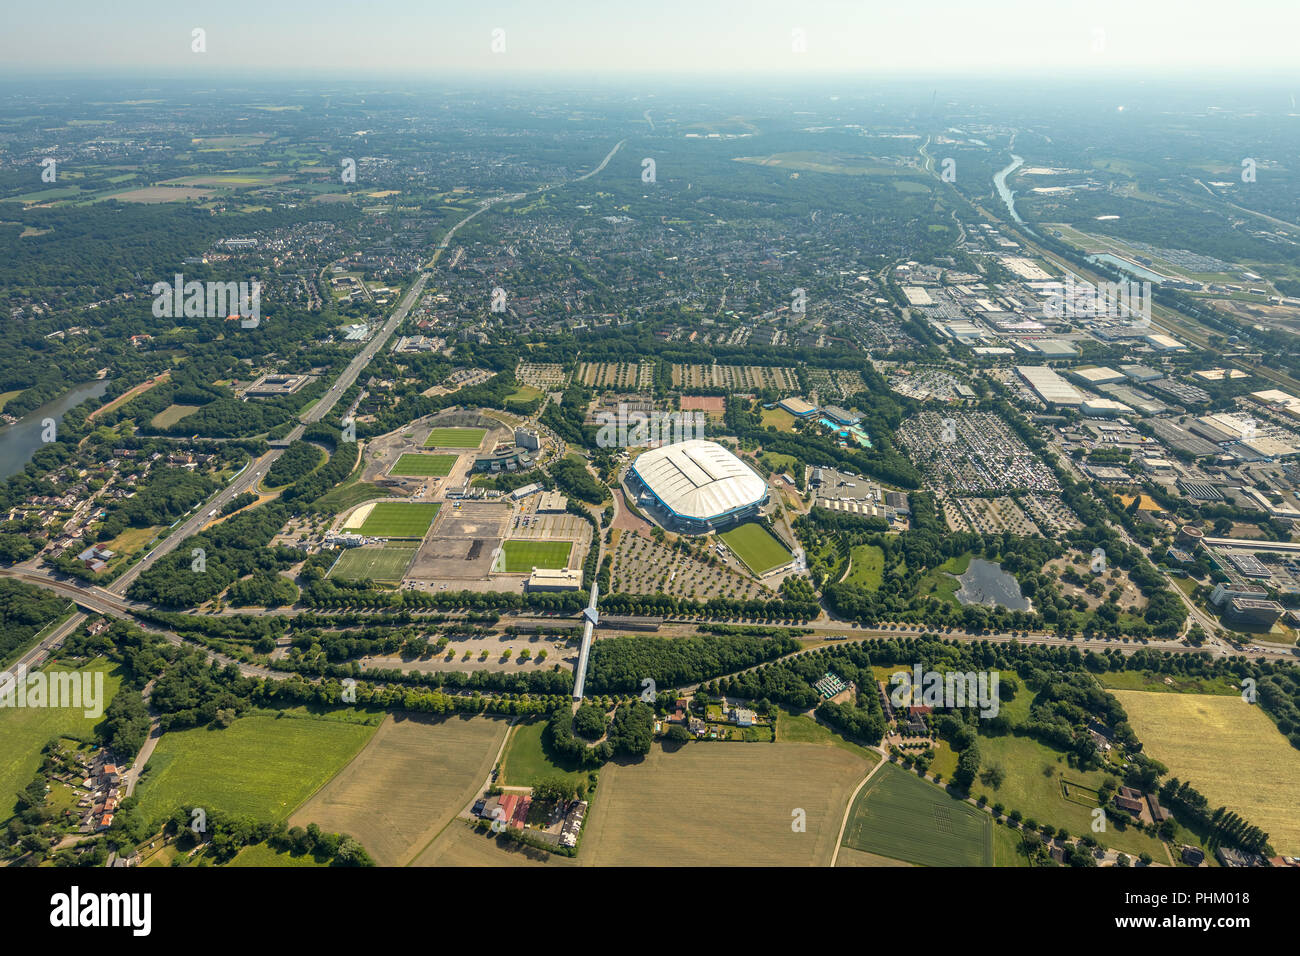 Aerial view, ARENA PARK Gelsenkirchen, Veltins-Arena, Arena AufSchalke in Gelsenkirchen is the soccer stadium of the German soccer club FC Schalke 04, Stock Photo